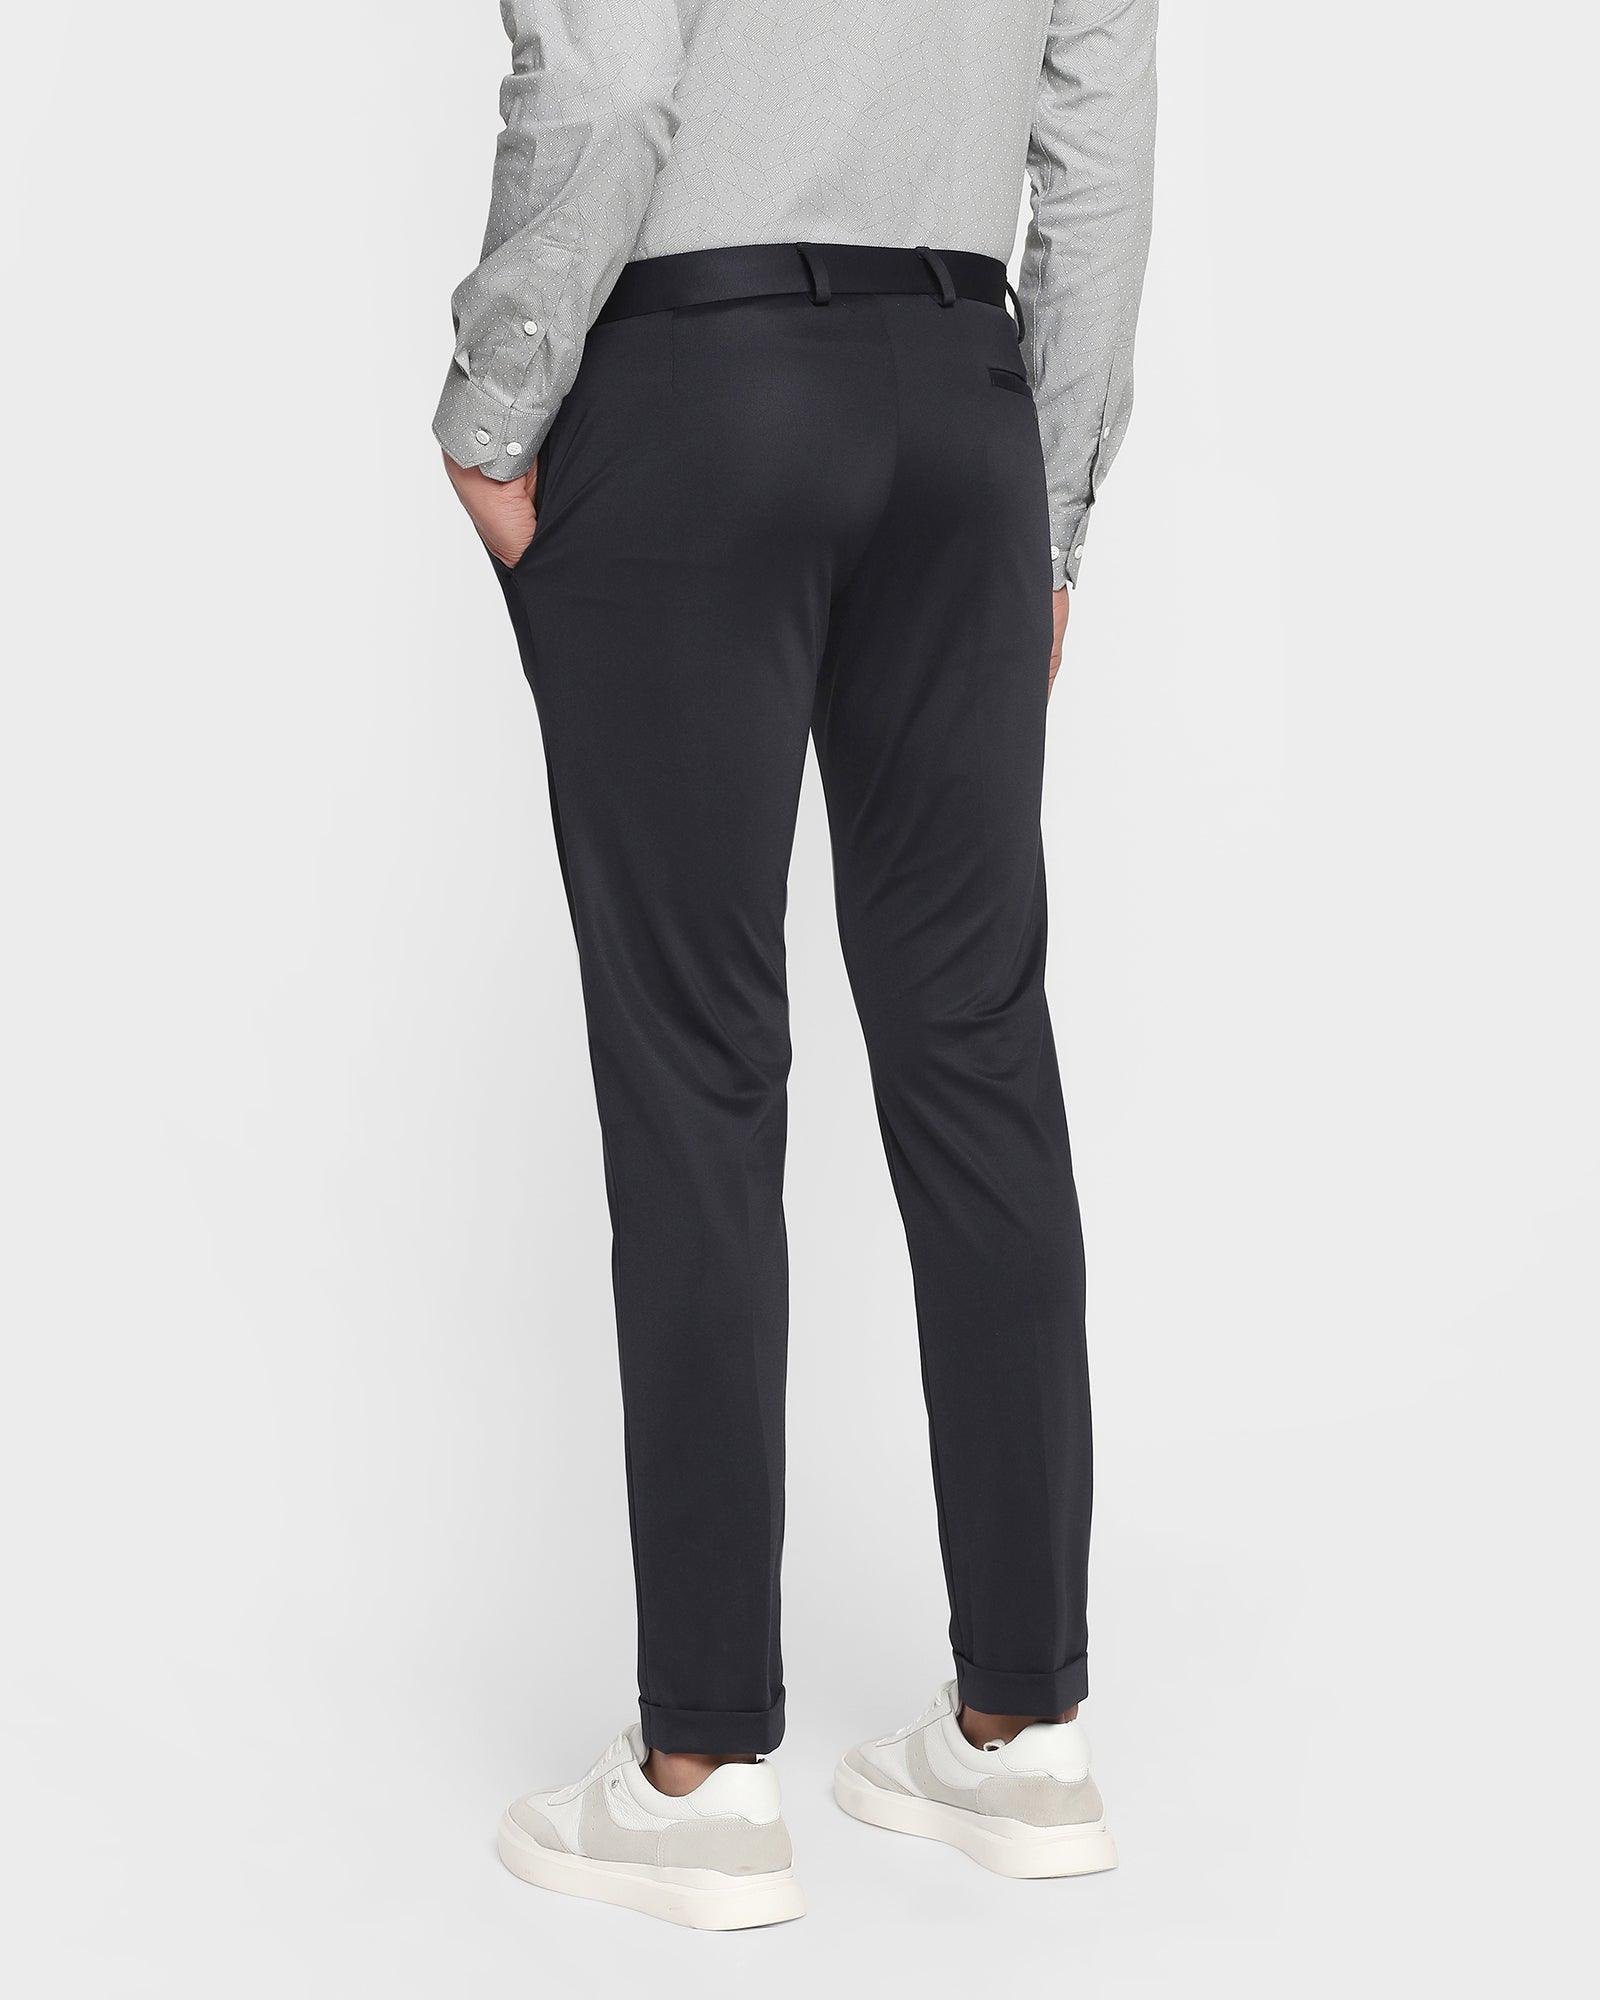 Buy Black Trousers  Pants for Men by JOHN PLAYERS Online  Ajiocom